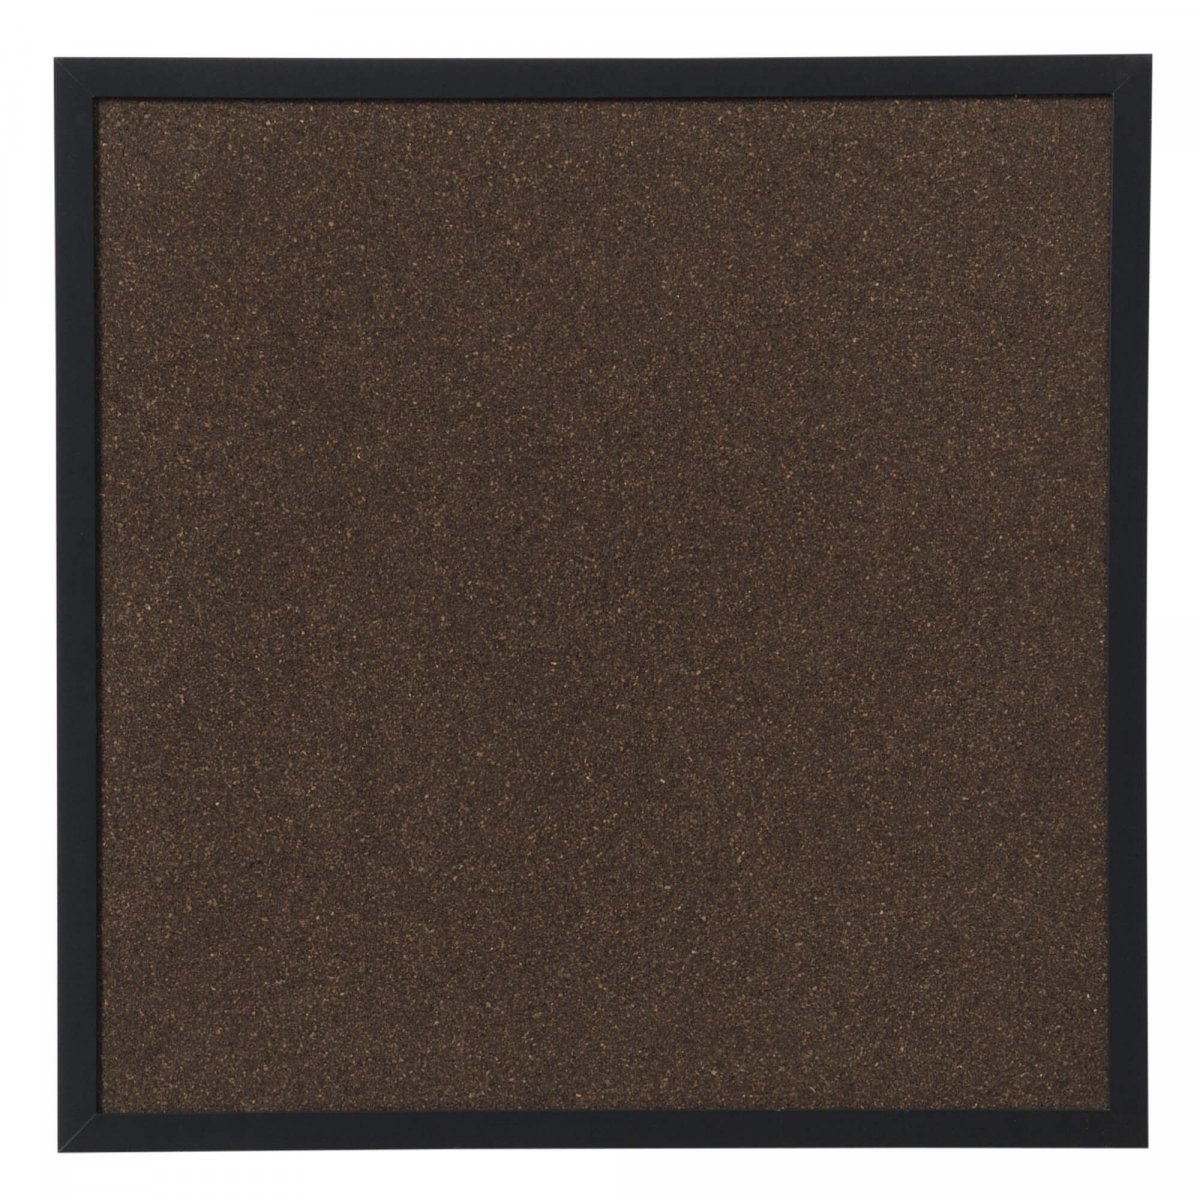 Naga Dark Cork Pinnwand mit schwarzem Rahmen - 60 x 60 cm.